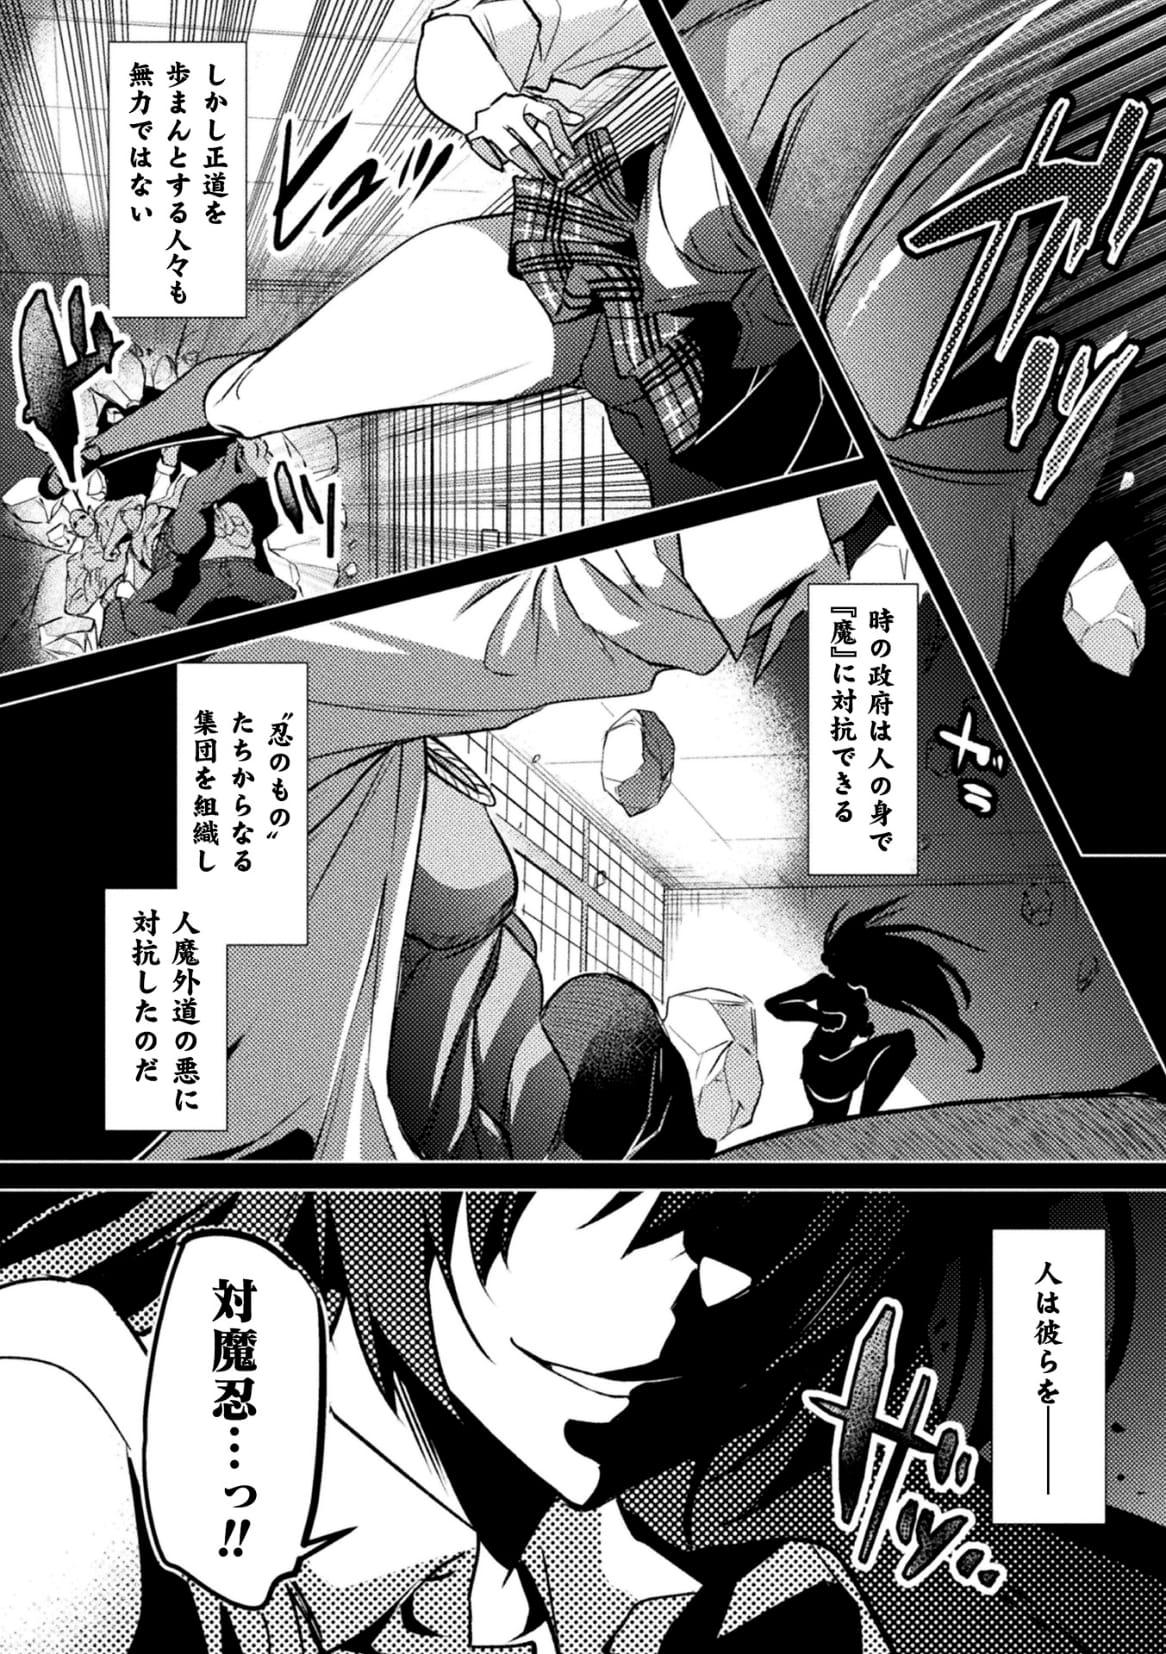 Chibola Taimanin Asagi ZERO THE COMIC vol 1 - Taimanin asagi Hardsex - Page 4